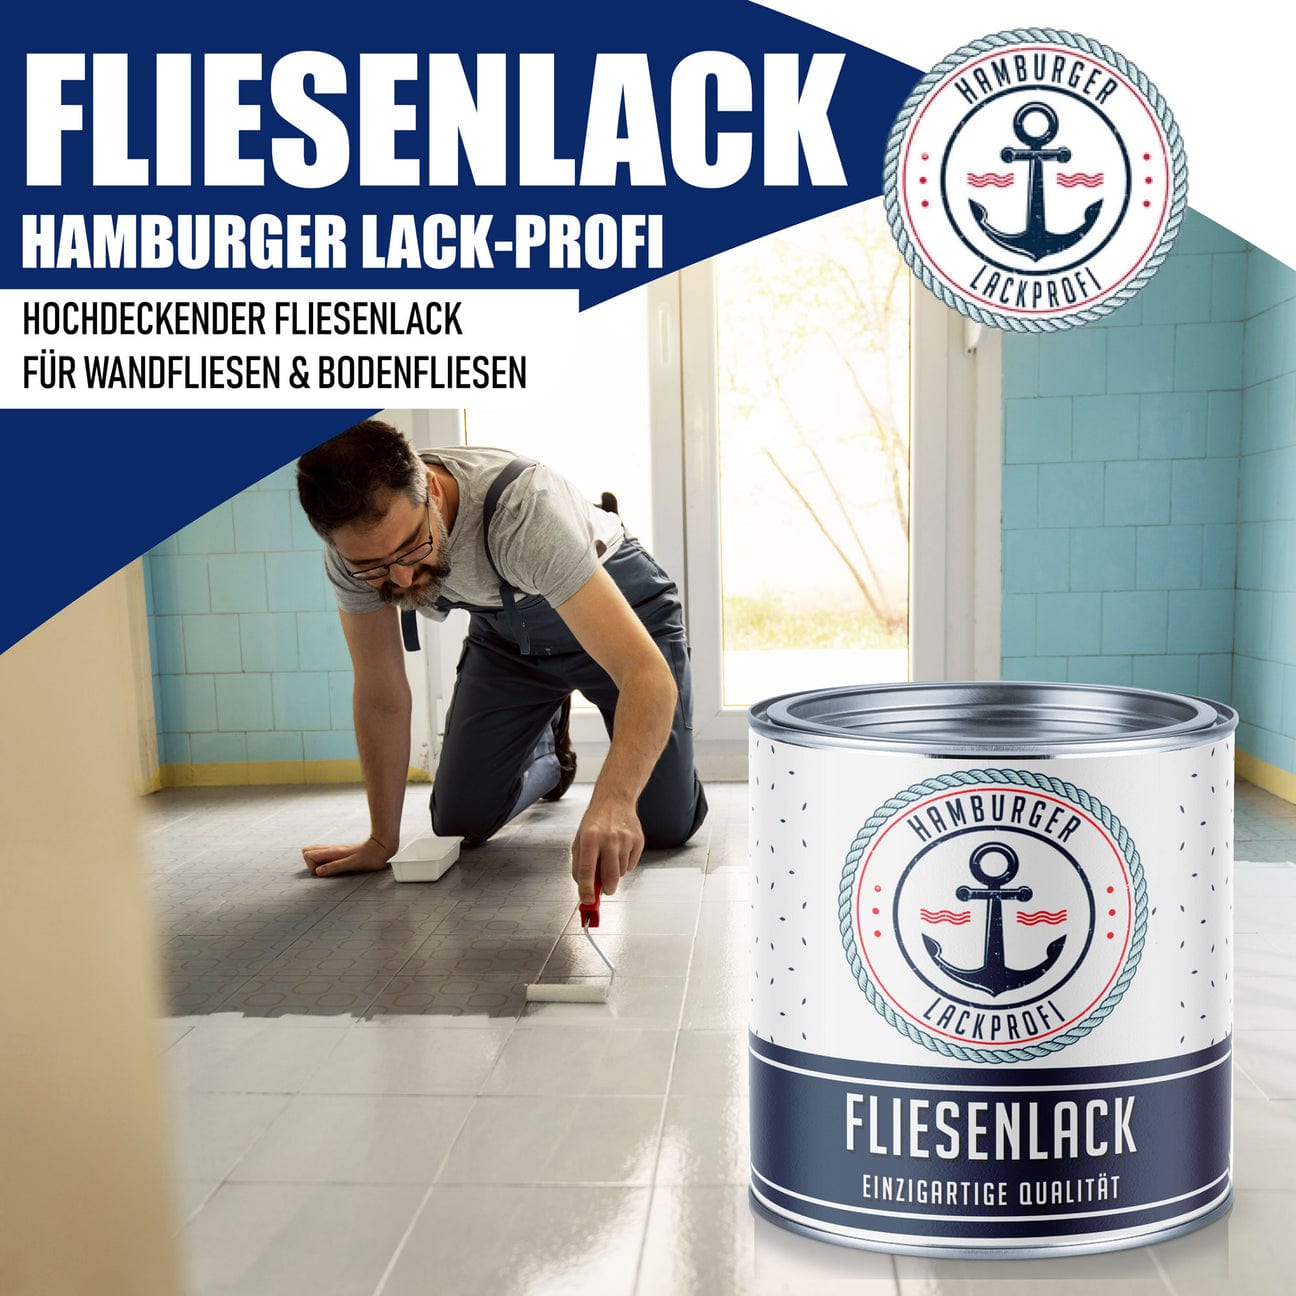 Hamburger Lack-Profi Hamburger Lack-Profi Fliesenlack Braungrau RAL 7013 - hochdeckende Fliesenfarbe Grau